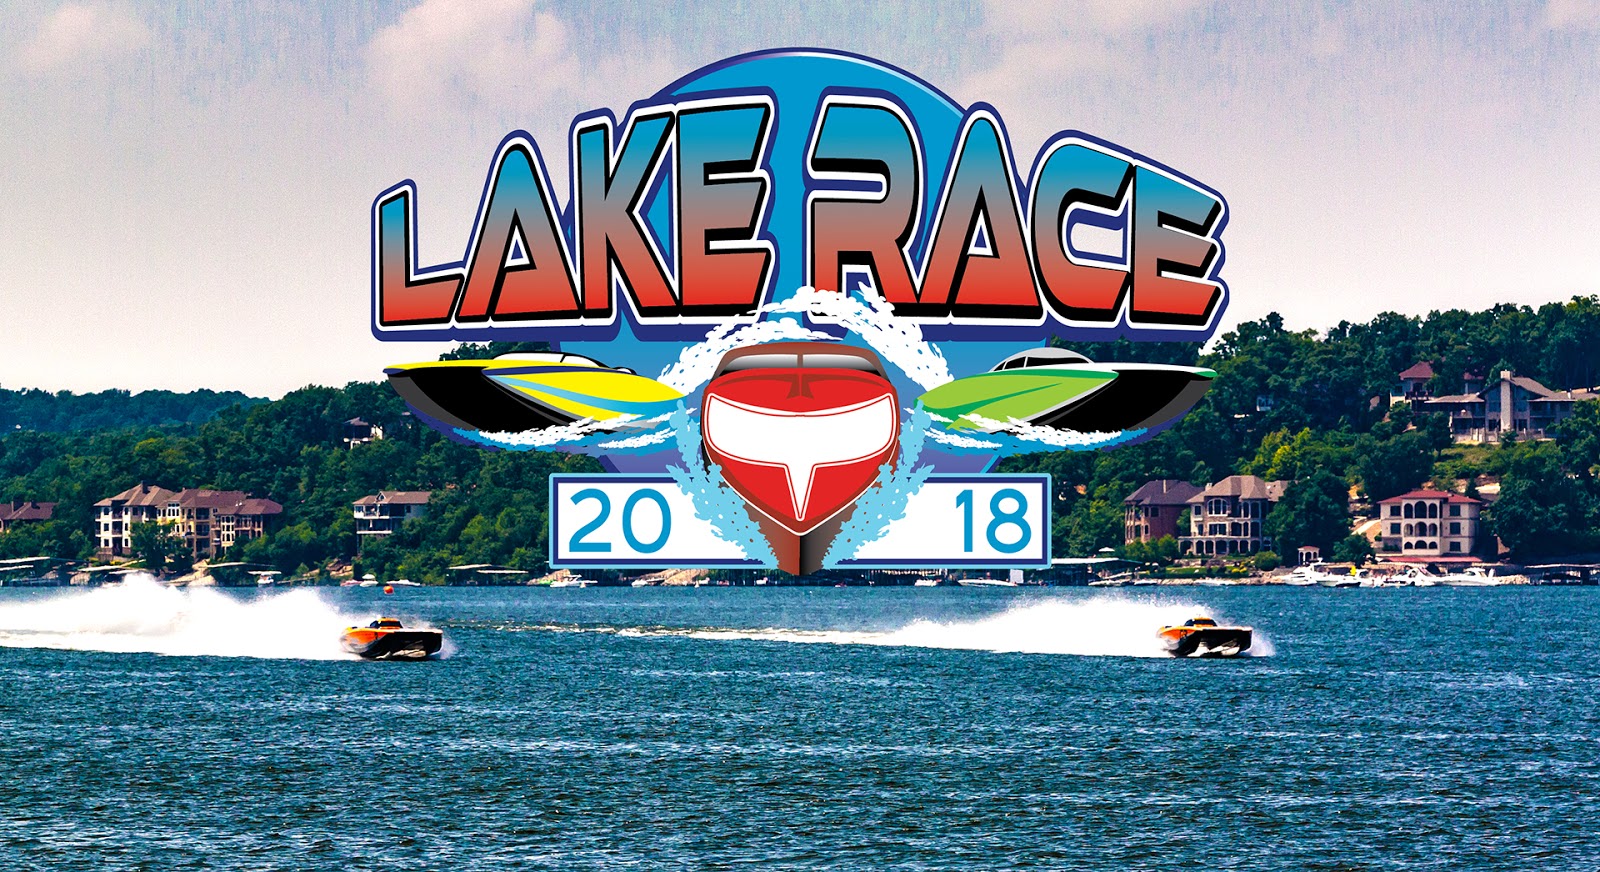 Lake of the Ozarks, MO The FunLakeMO Blog 2018 Lake Race Brings High